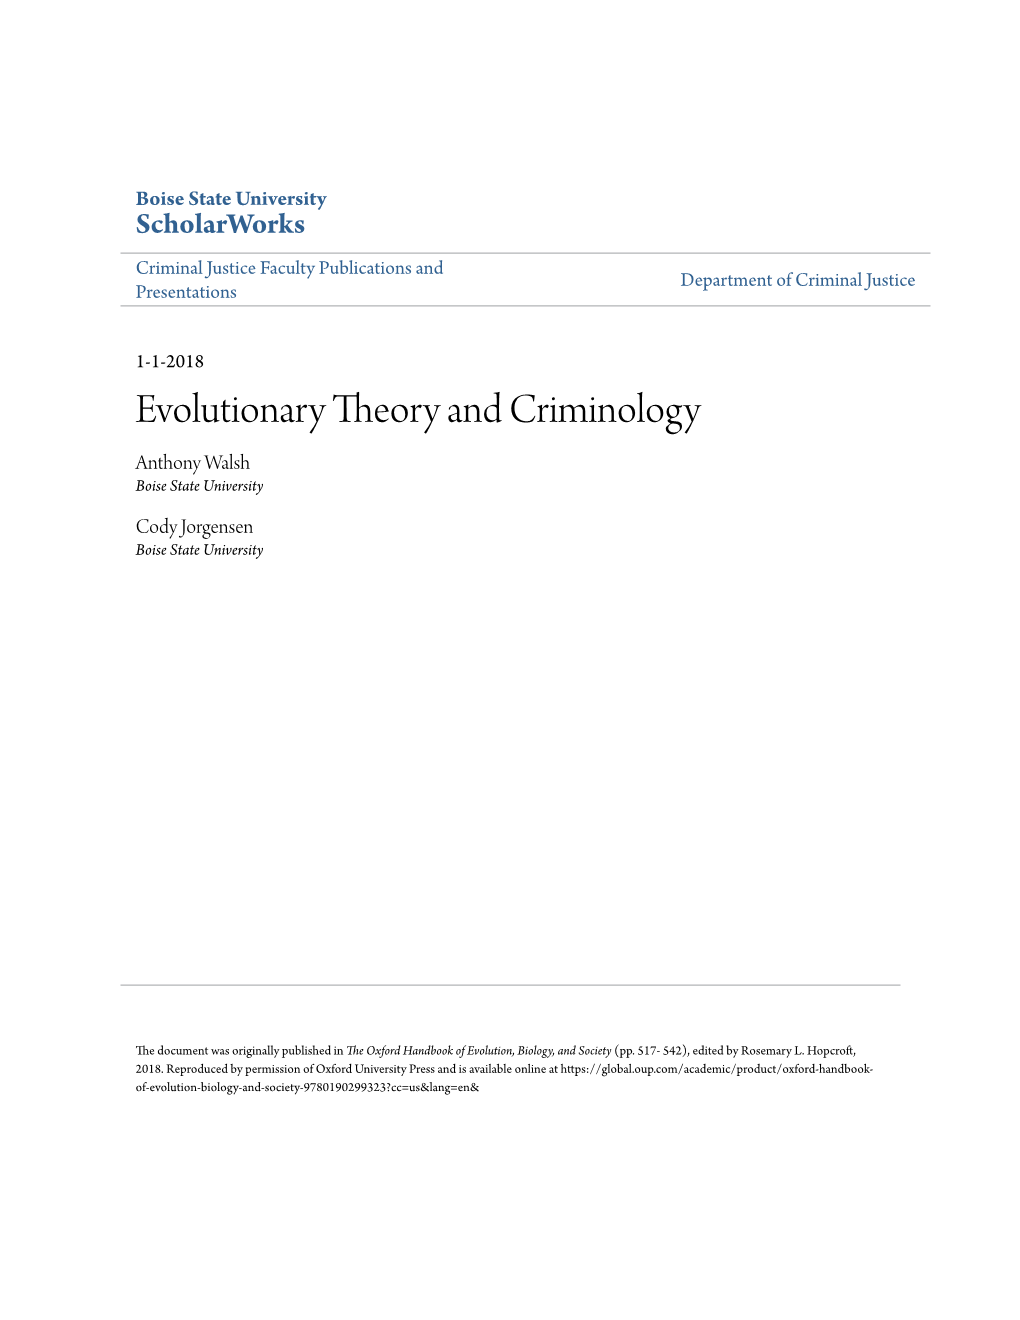 Evolutionary Theory and Criminology Anthony Walsh Boise State University